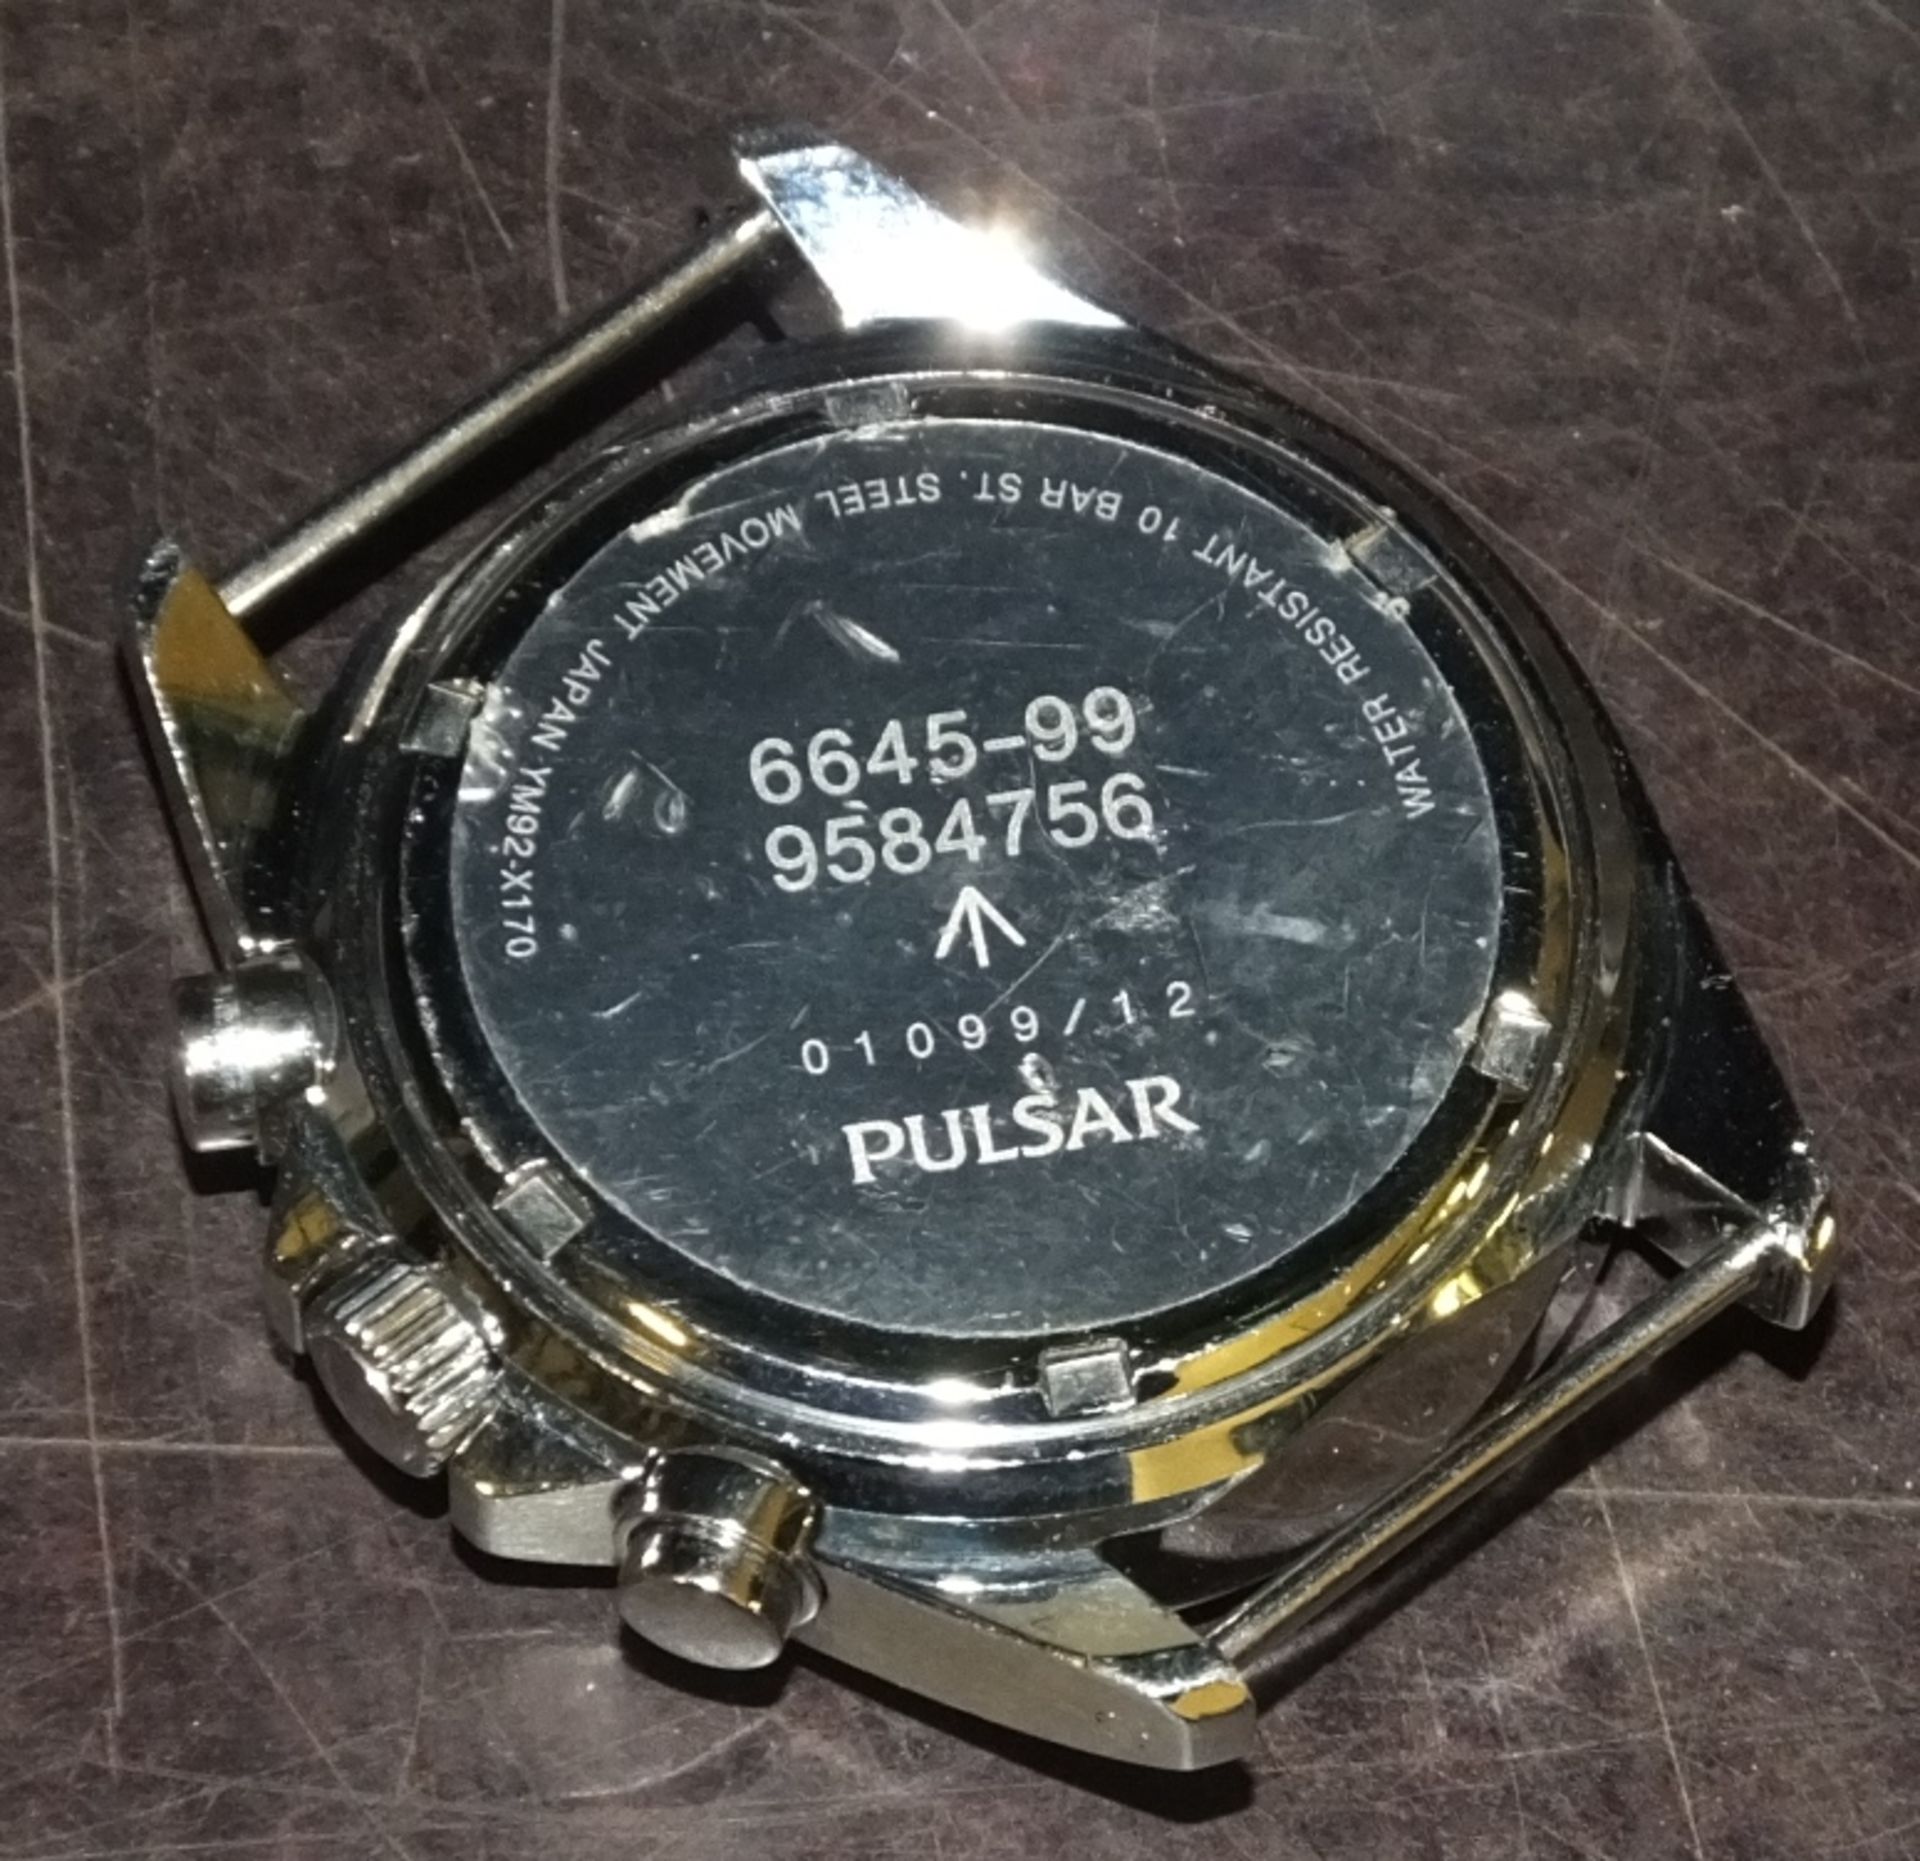 Pulsar Chronograph Watch 100m - Image 3 of 3